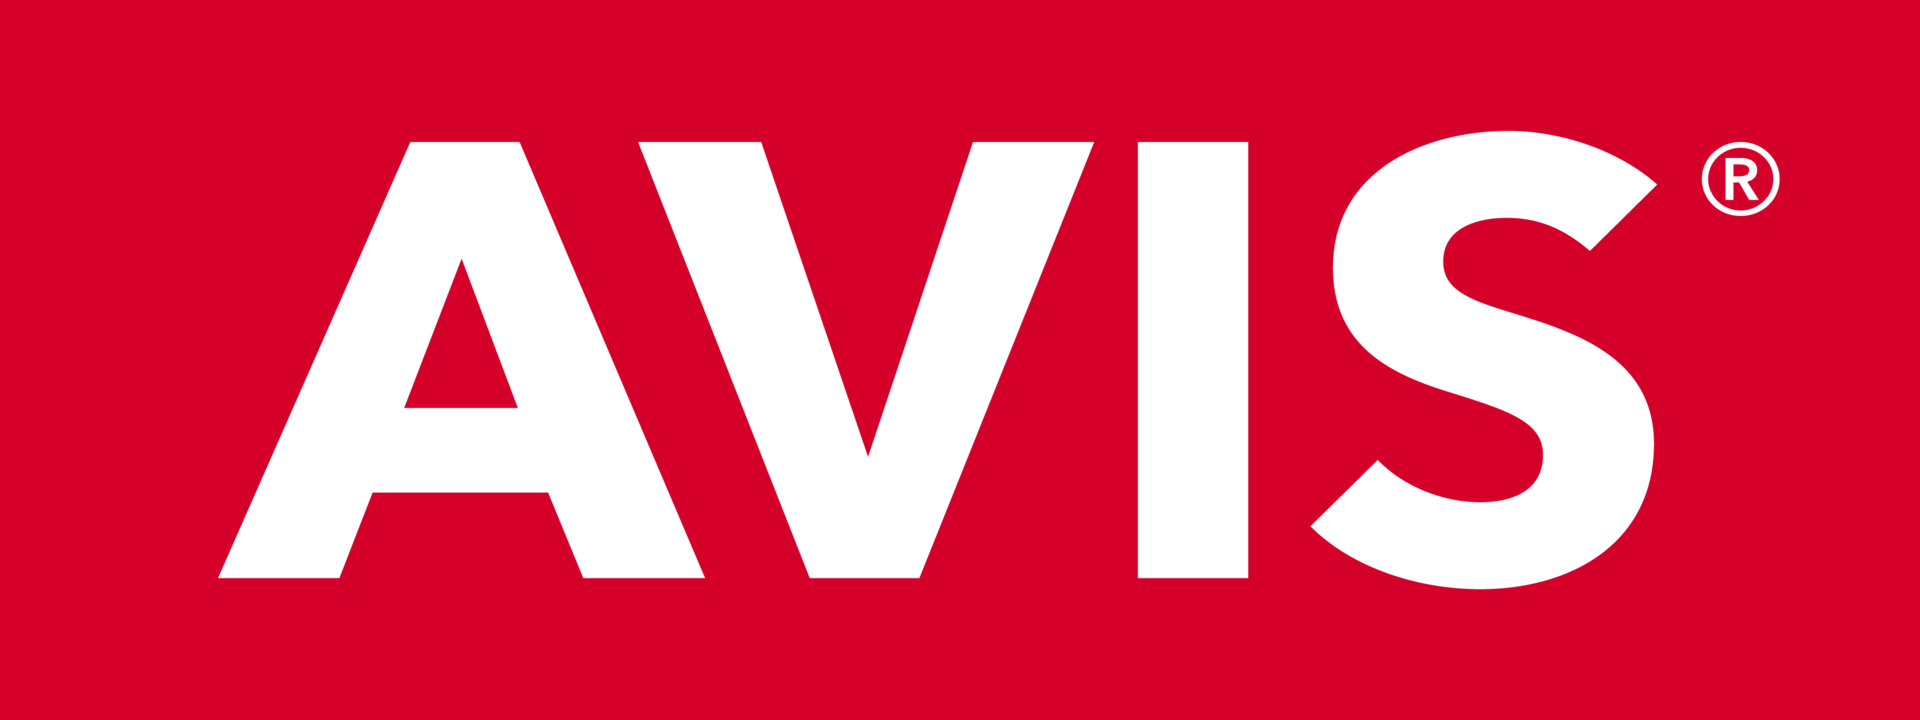 Avis Primary Logo_JPG_RGB.png